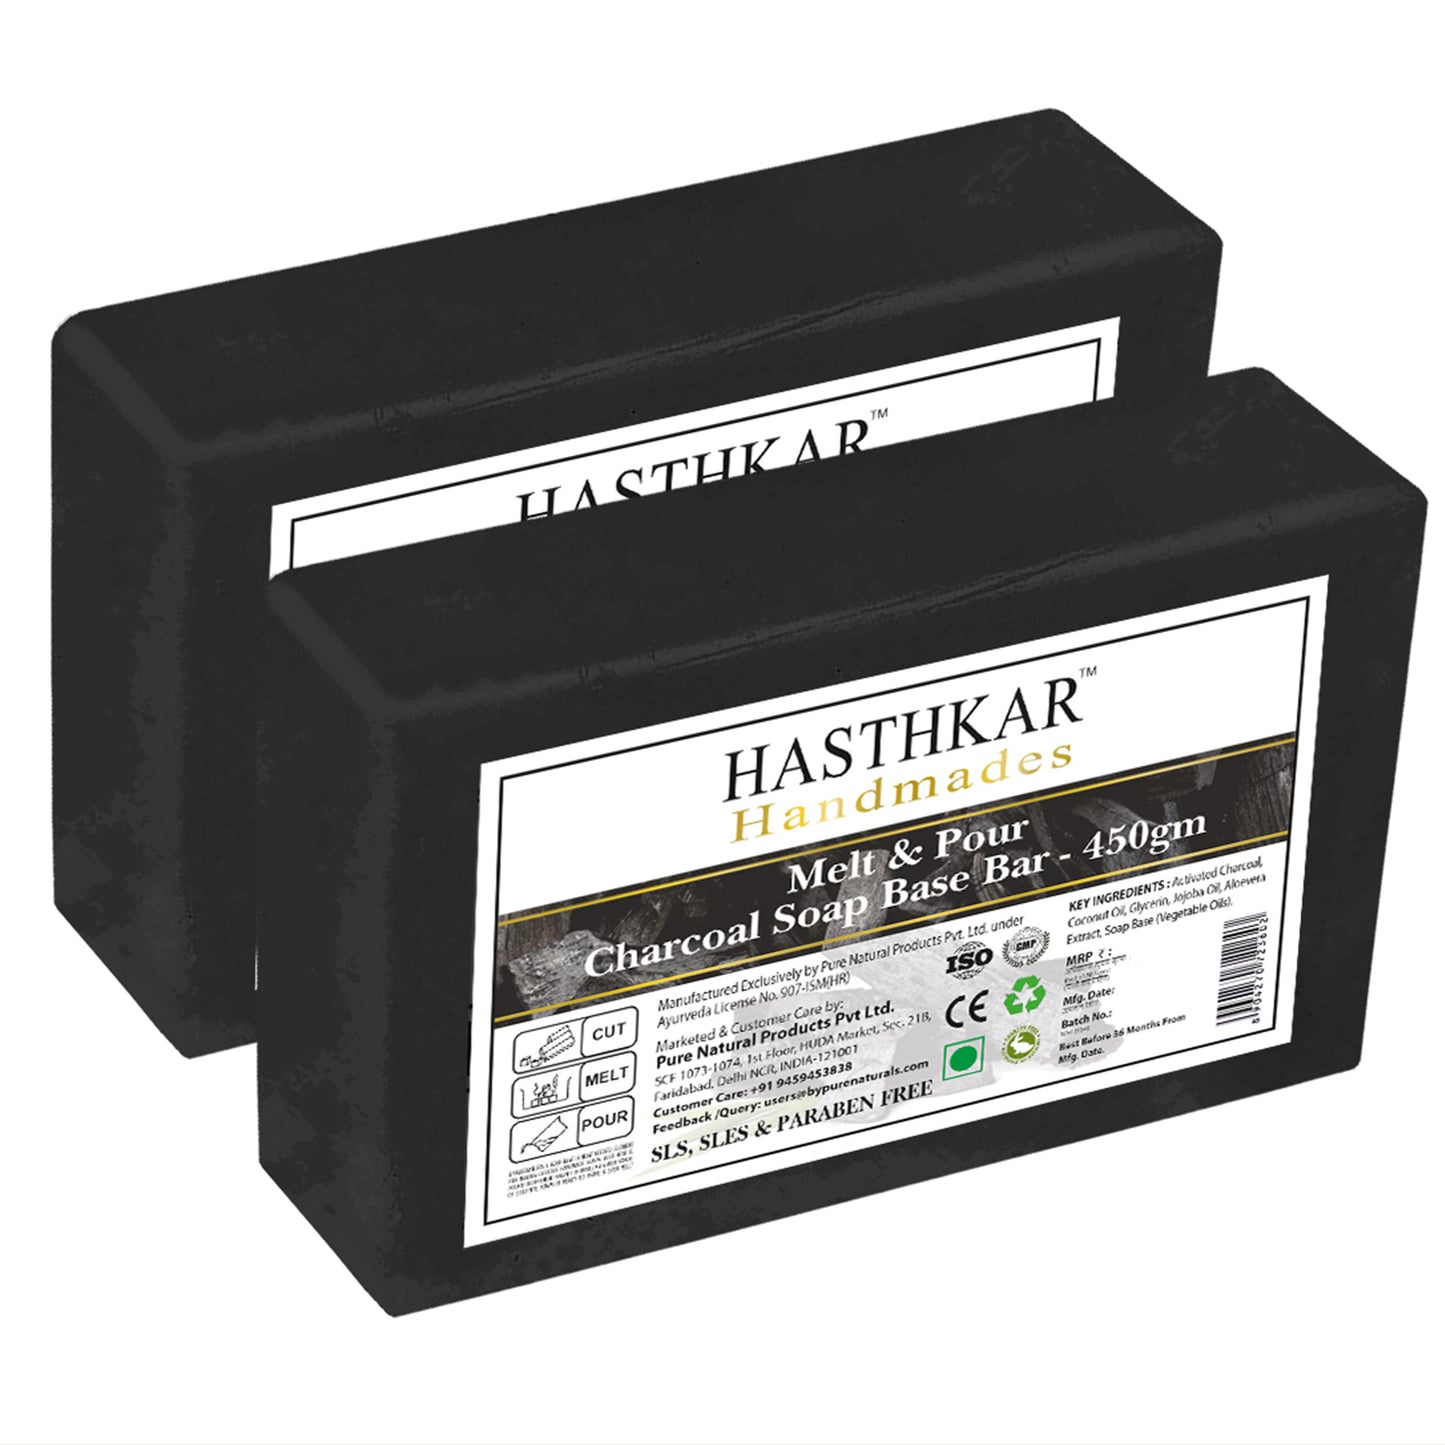 Hasthkar Handmades Soap Base Bar Charcoal 450gm Pack of 2